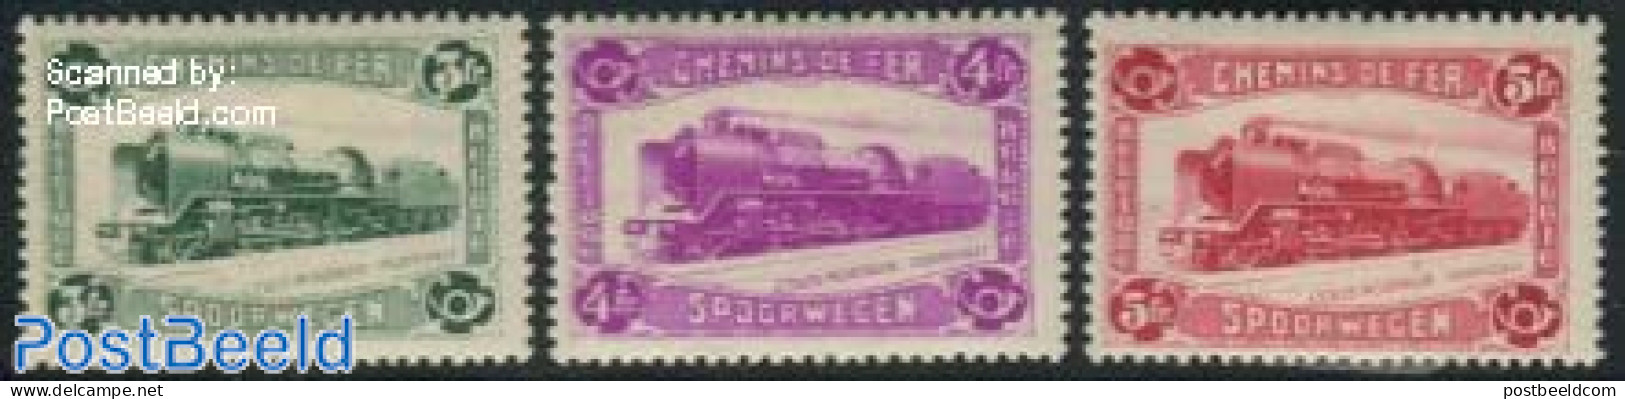 Belgium 1934 Parcel Stamps 3v, Unused (hinged), Transport - Railways - Nuovi